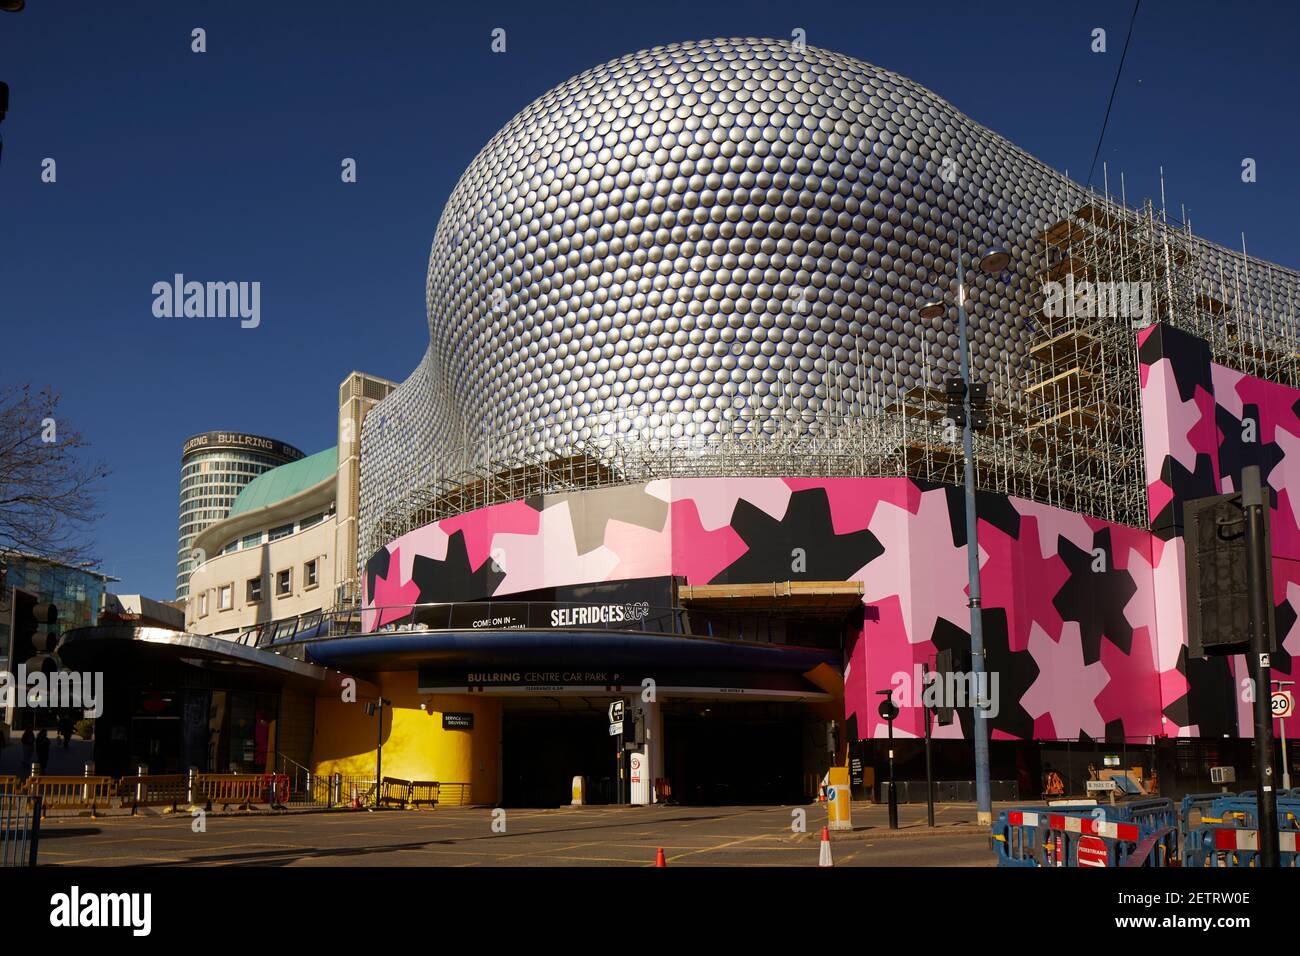 Birmingham city centre landmark  iconic Selfridges building enveloped bold eye-catching pink black wrap while the original design is cleaned repainted Stock Photo